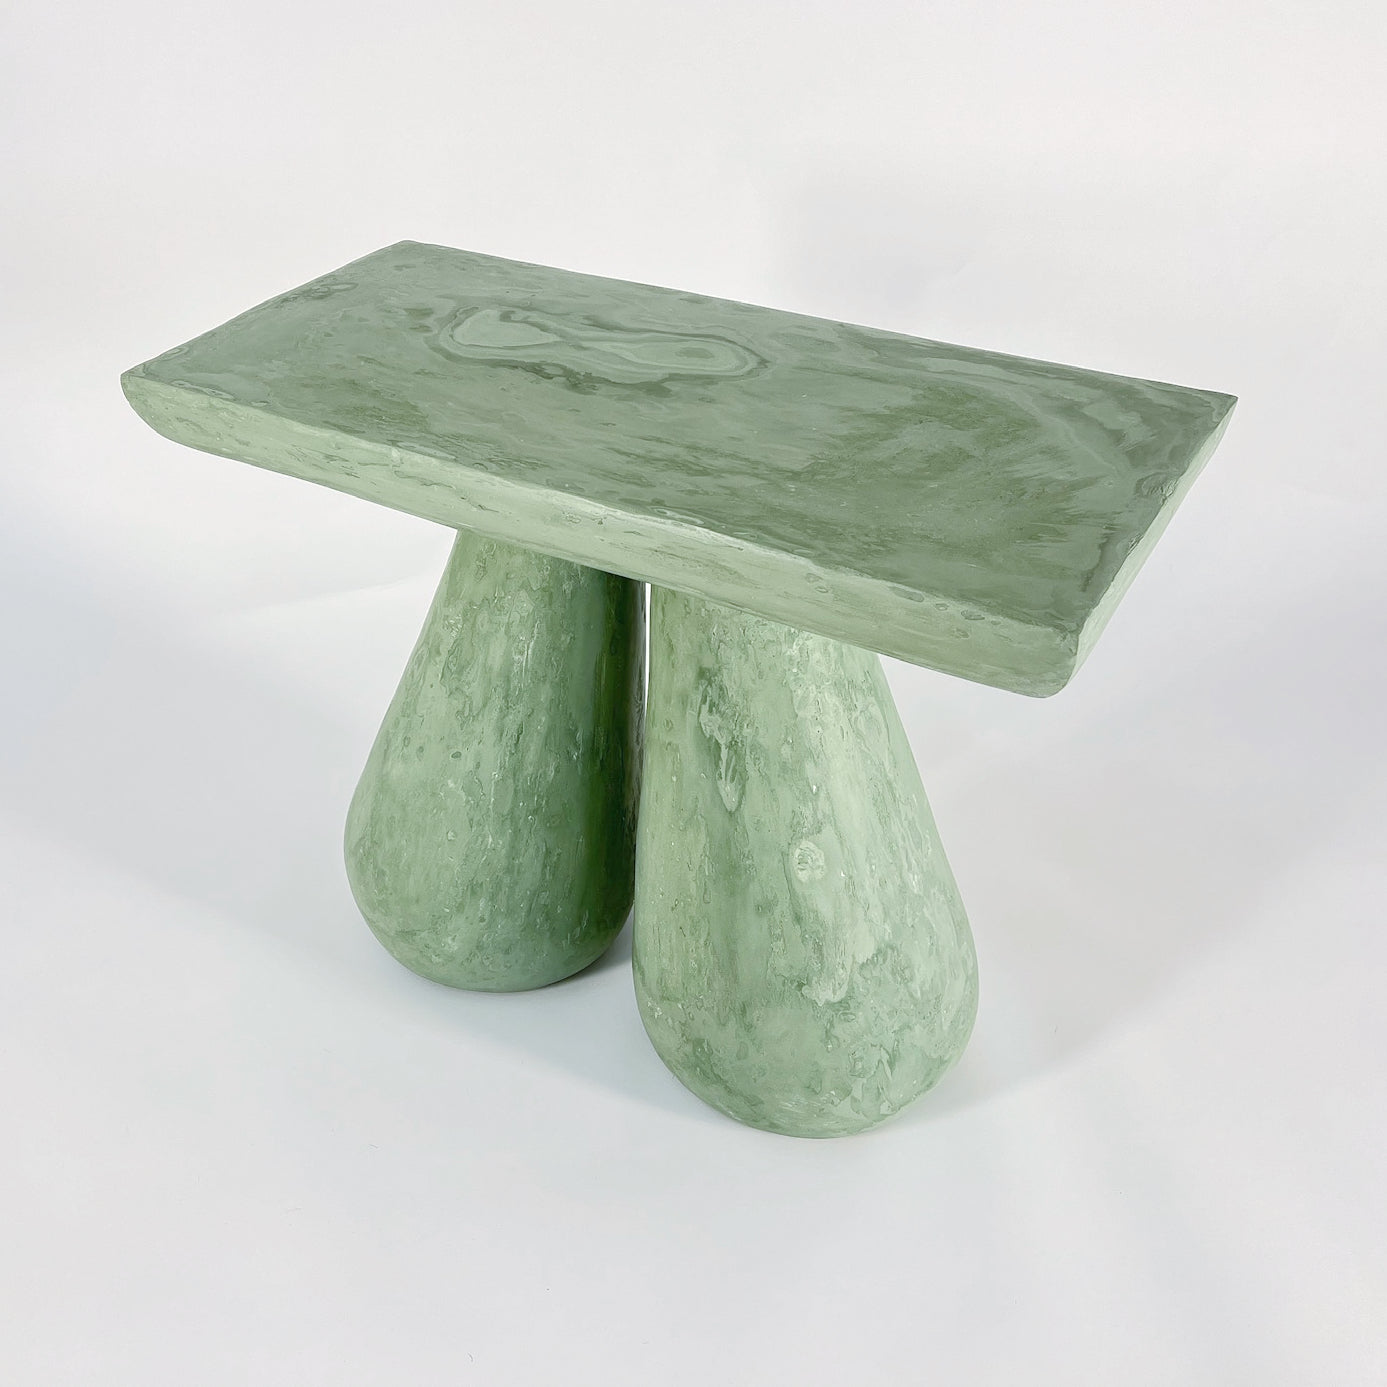 Erika Mini Table